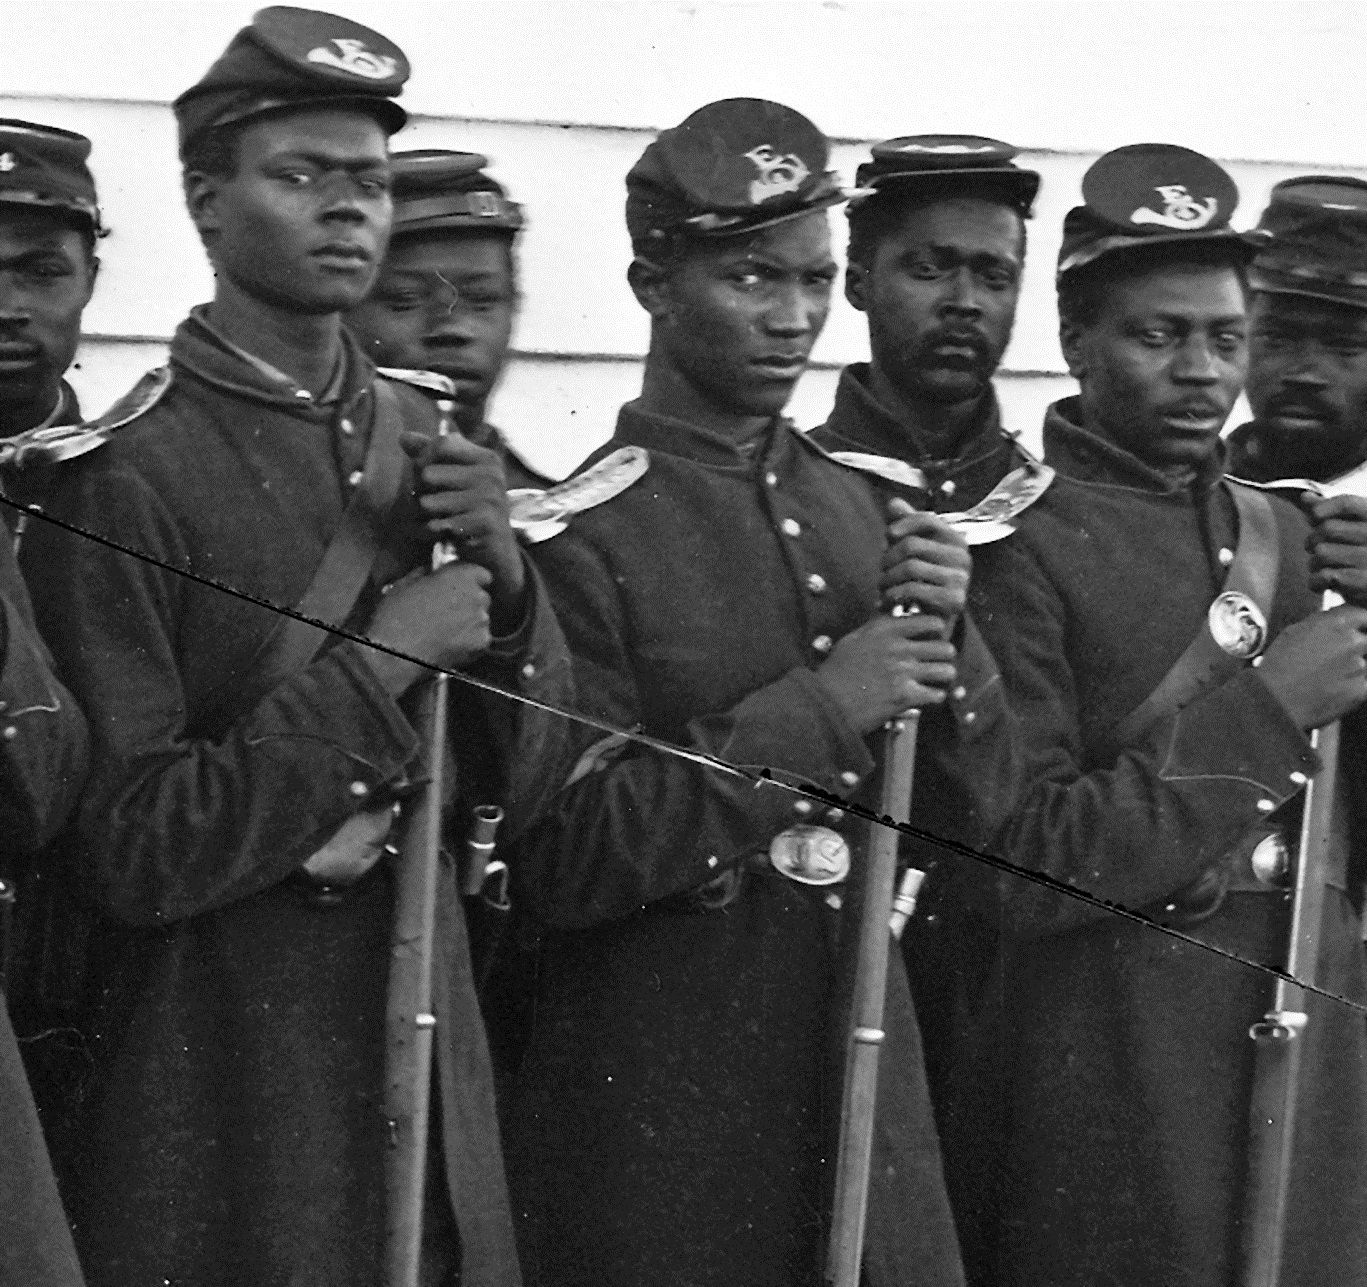 u.s navy had few position for black in civil war